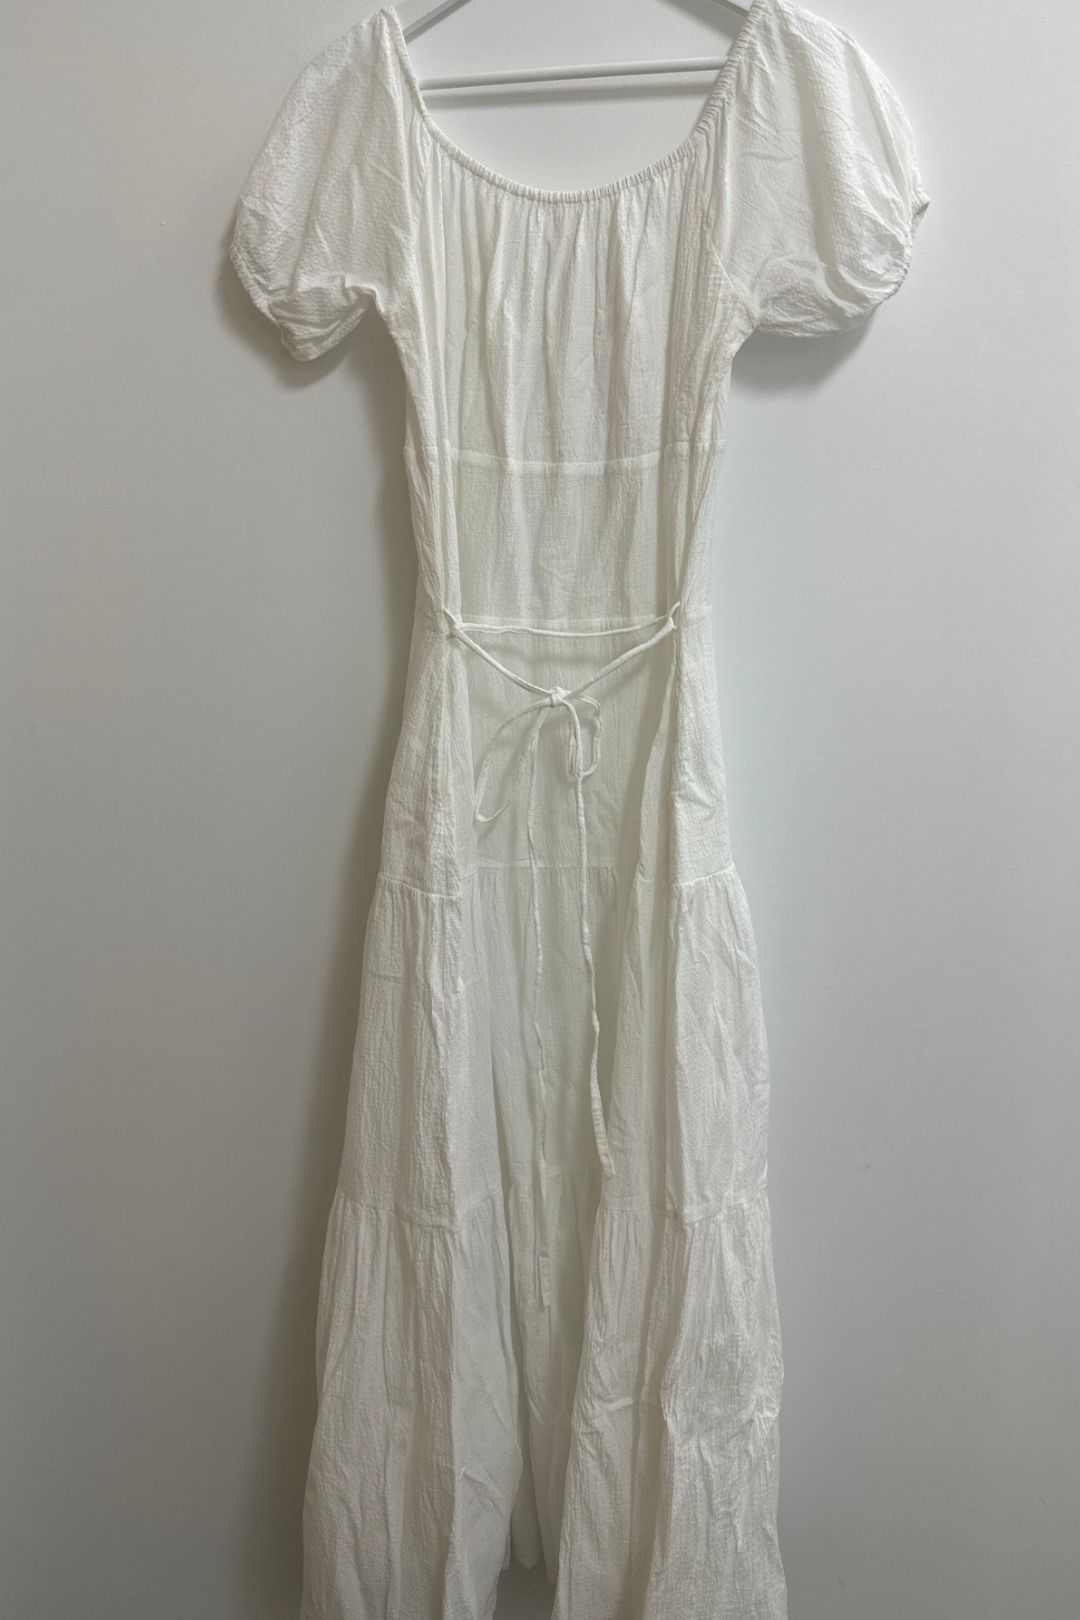 UNIK by us White Puff Sleeve Maxi Dress